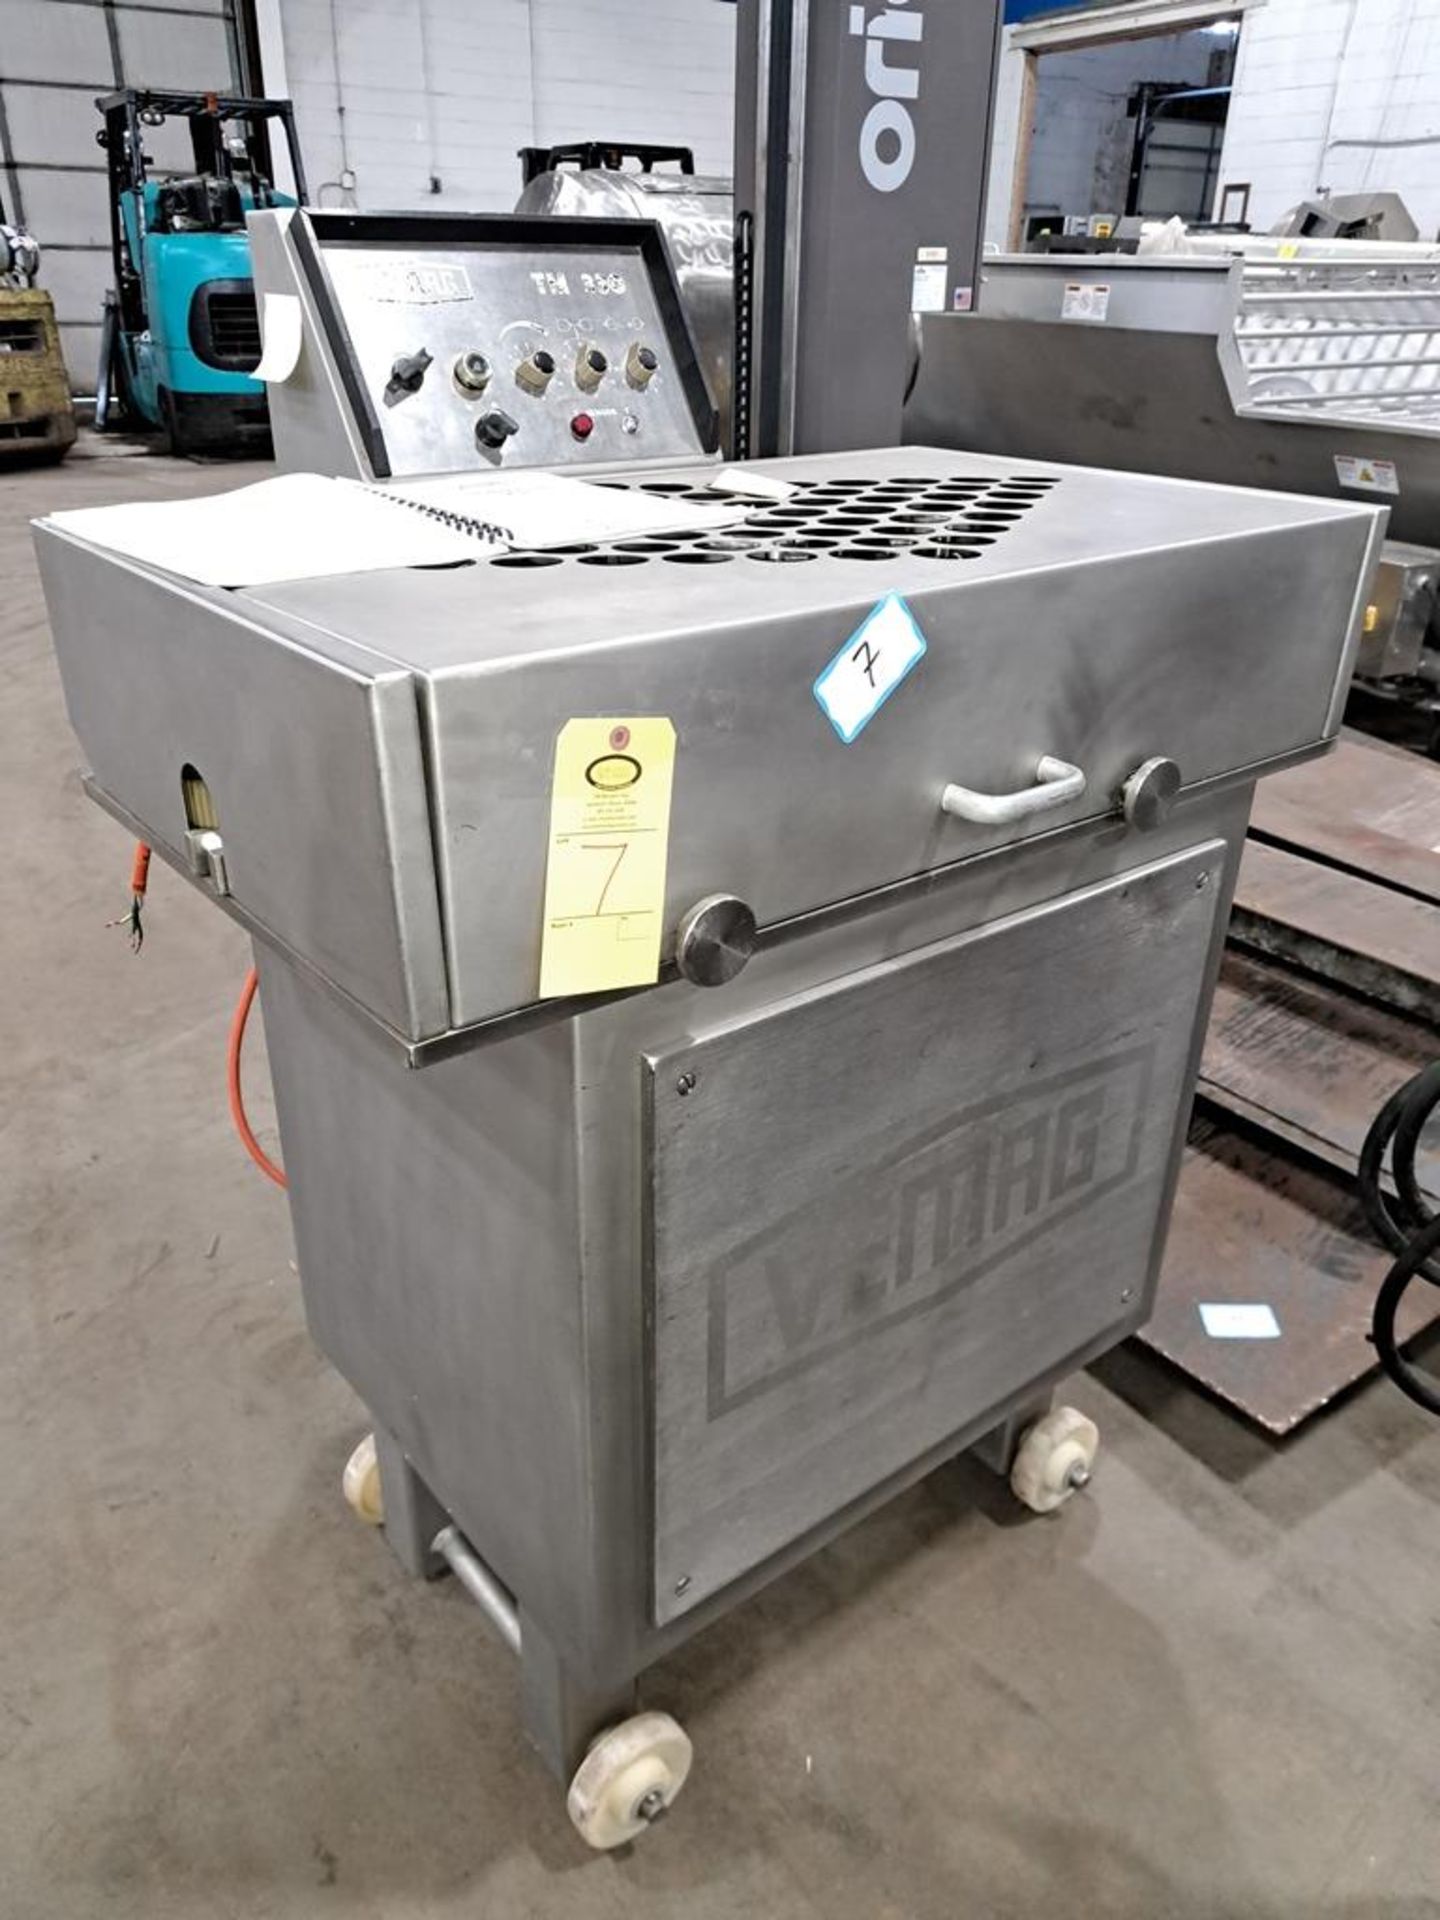 Vemag Mdl. TM330 Sausage Cutting Machine, 208 volts, 3 phase, Mfg. 1990, Ser. #330.0041 (Located